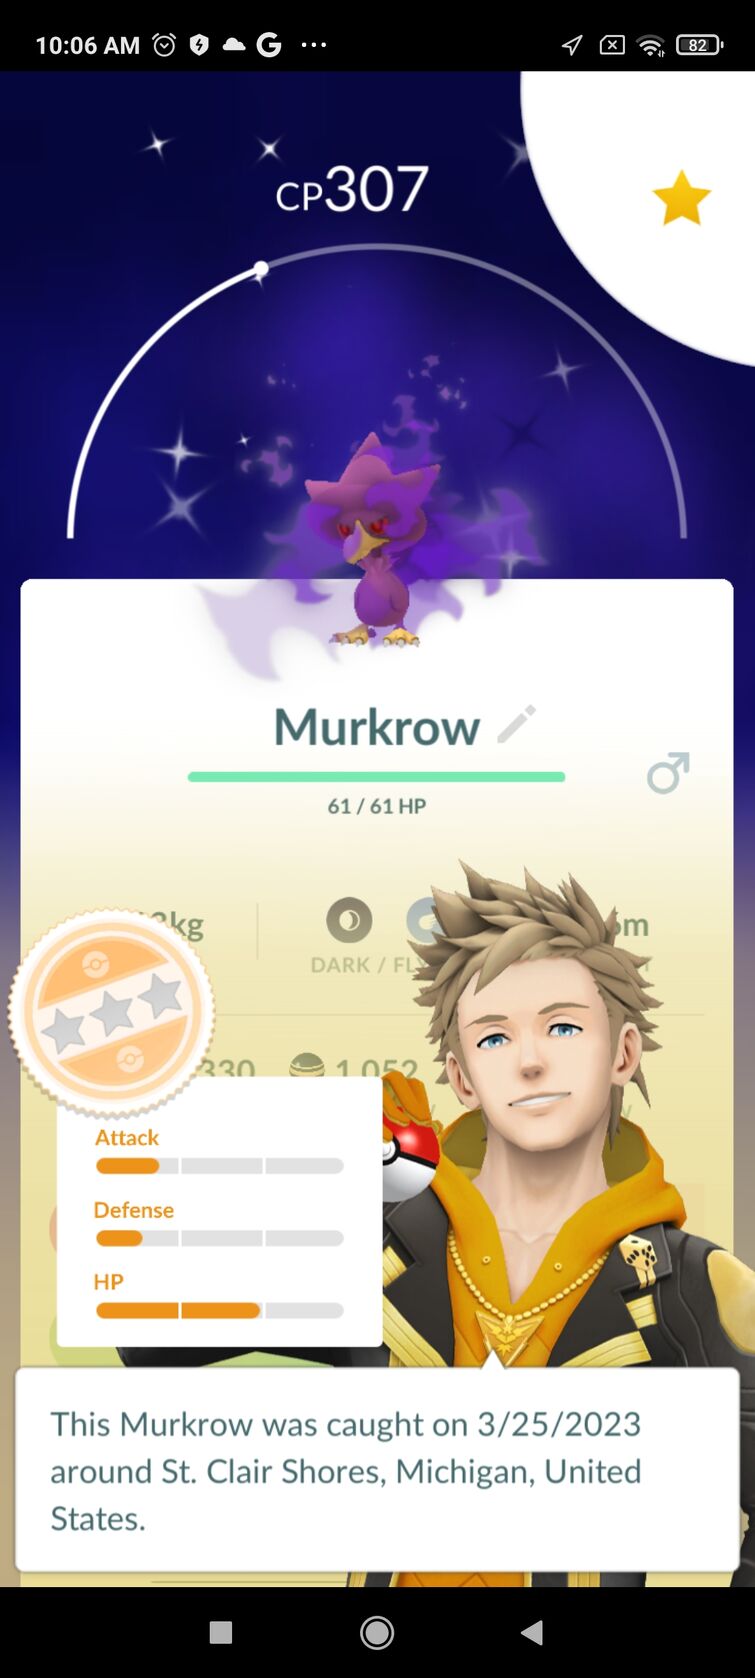 Upcoming Pokémon GO events in November 2022: Giovanni, Shadow